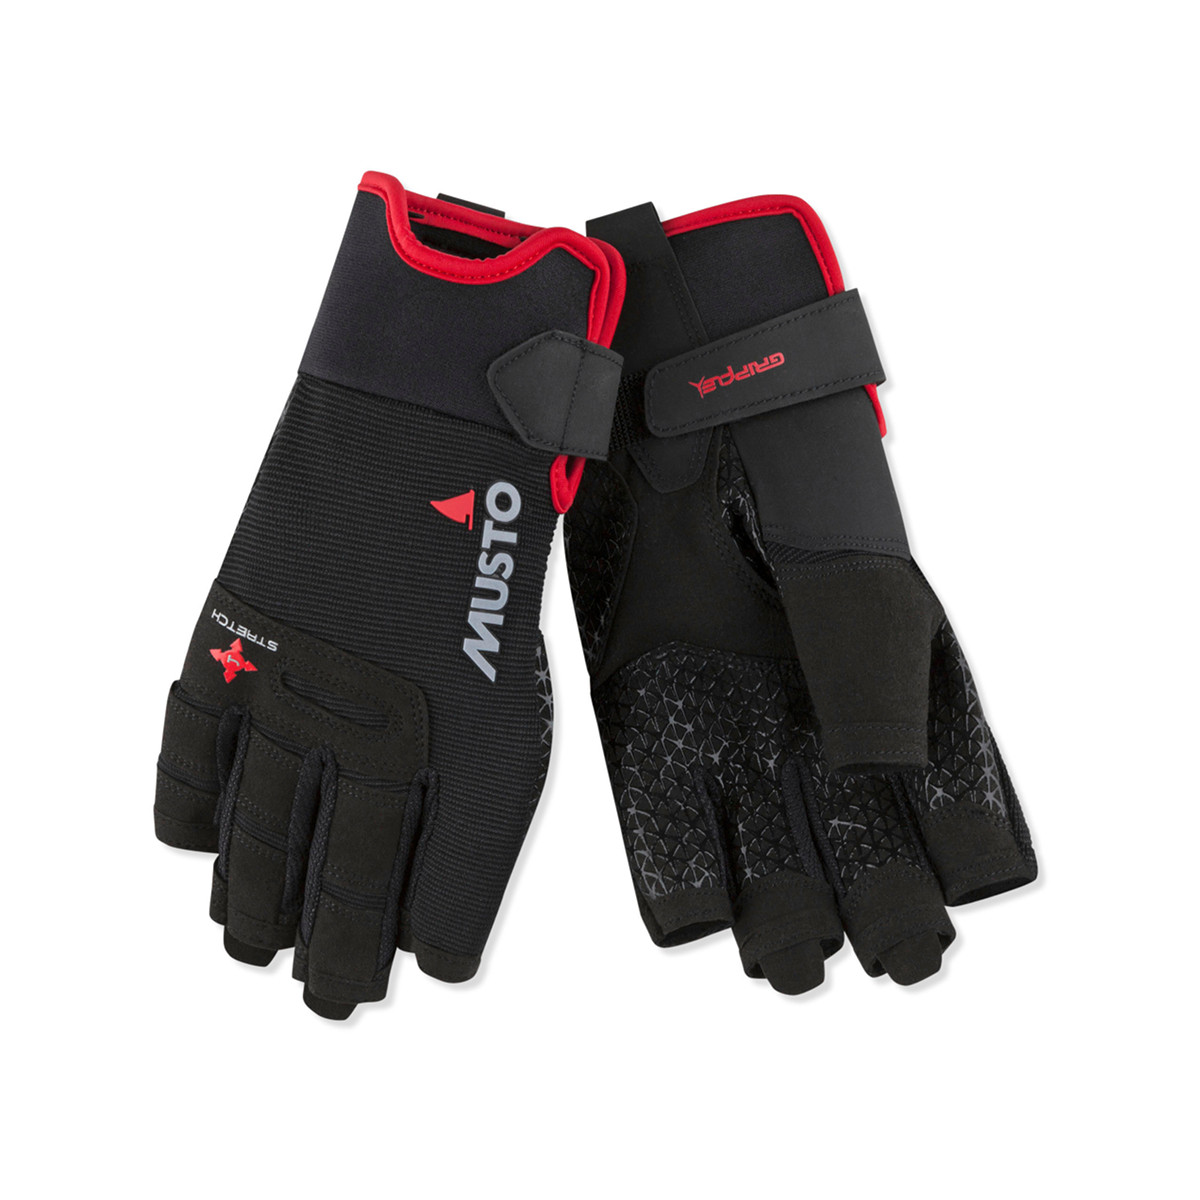 Musto Performance gants de voile doigts courts noirs, taille XS